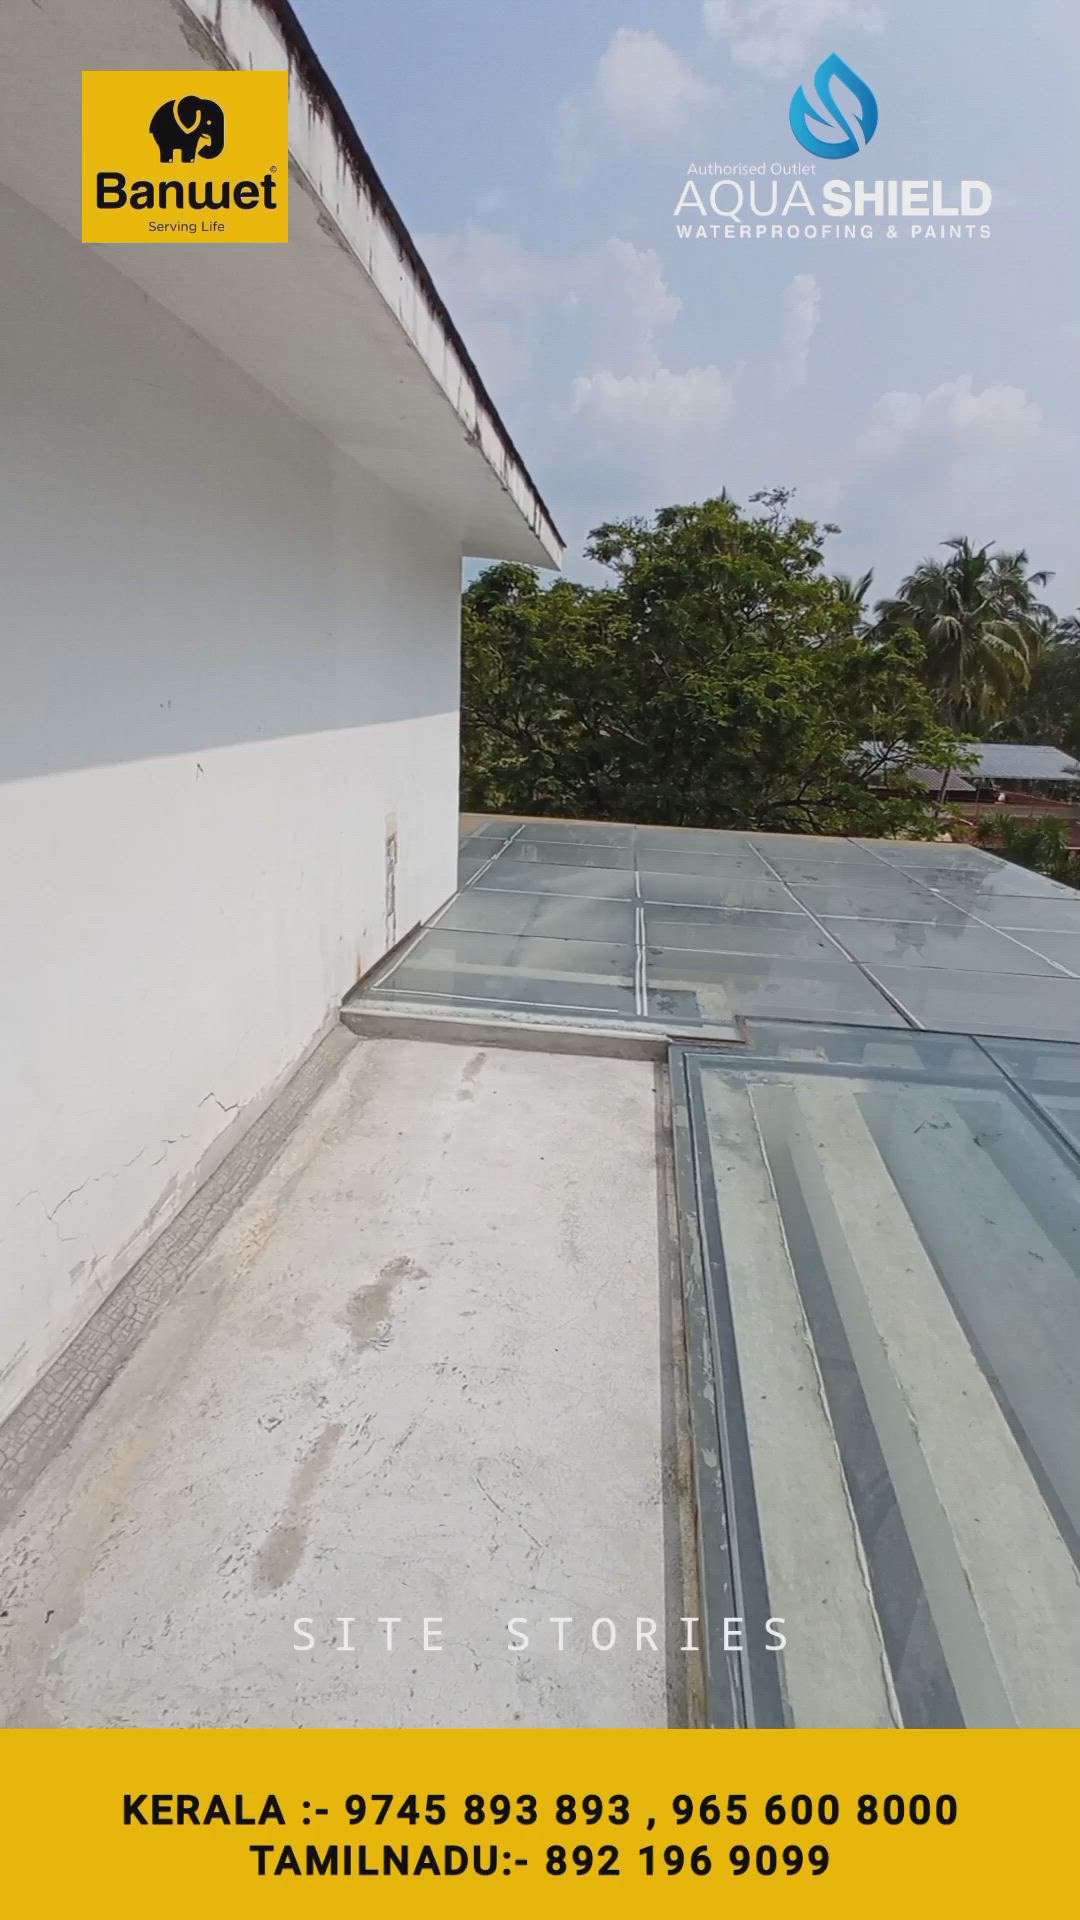 |• Work Going On •|

Terrace waterproofing 1000 sqft

Client :-
Mr Salim v p f/o Shamlik Salim
Anangadi, Kerala,673314 
.
.
.
.
.
.
.
.
.
.
.
.
.
@shamlik_vp
@_shamil_saleem__
.
.
.
.
.
.
#waterproofing #leakage #terracewaterproofing #puflex #kerala#acrylic #acrylicpainting #polyurethane #kadalundikkaran #kadalundikkar #malayalam #malappuram #malappuramkaar #uv #ultraviolet #malappuram_freekerzz #kozhikkode #kozhikoottukar #kondotty #kondottykkar #thallumaala #nnathaancasekodu #kgf2 #worldcup #2022 #terrace #kadalundi #kadalundibridge #kadalundibirdsanctury #ncgarden